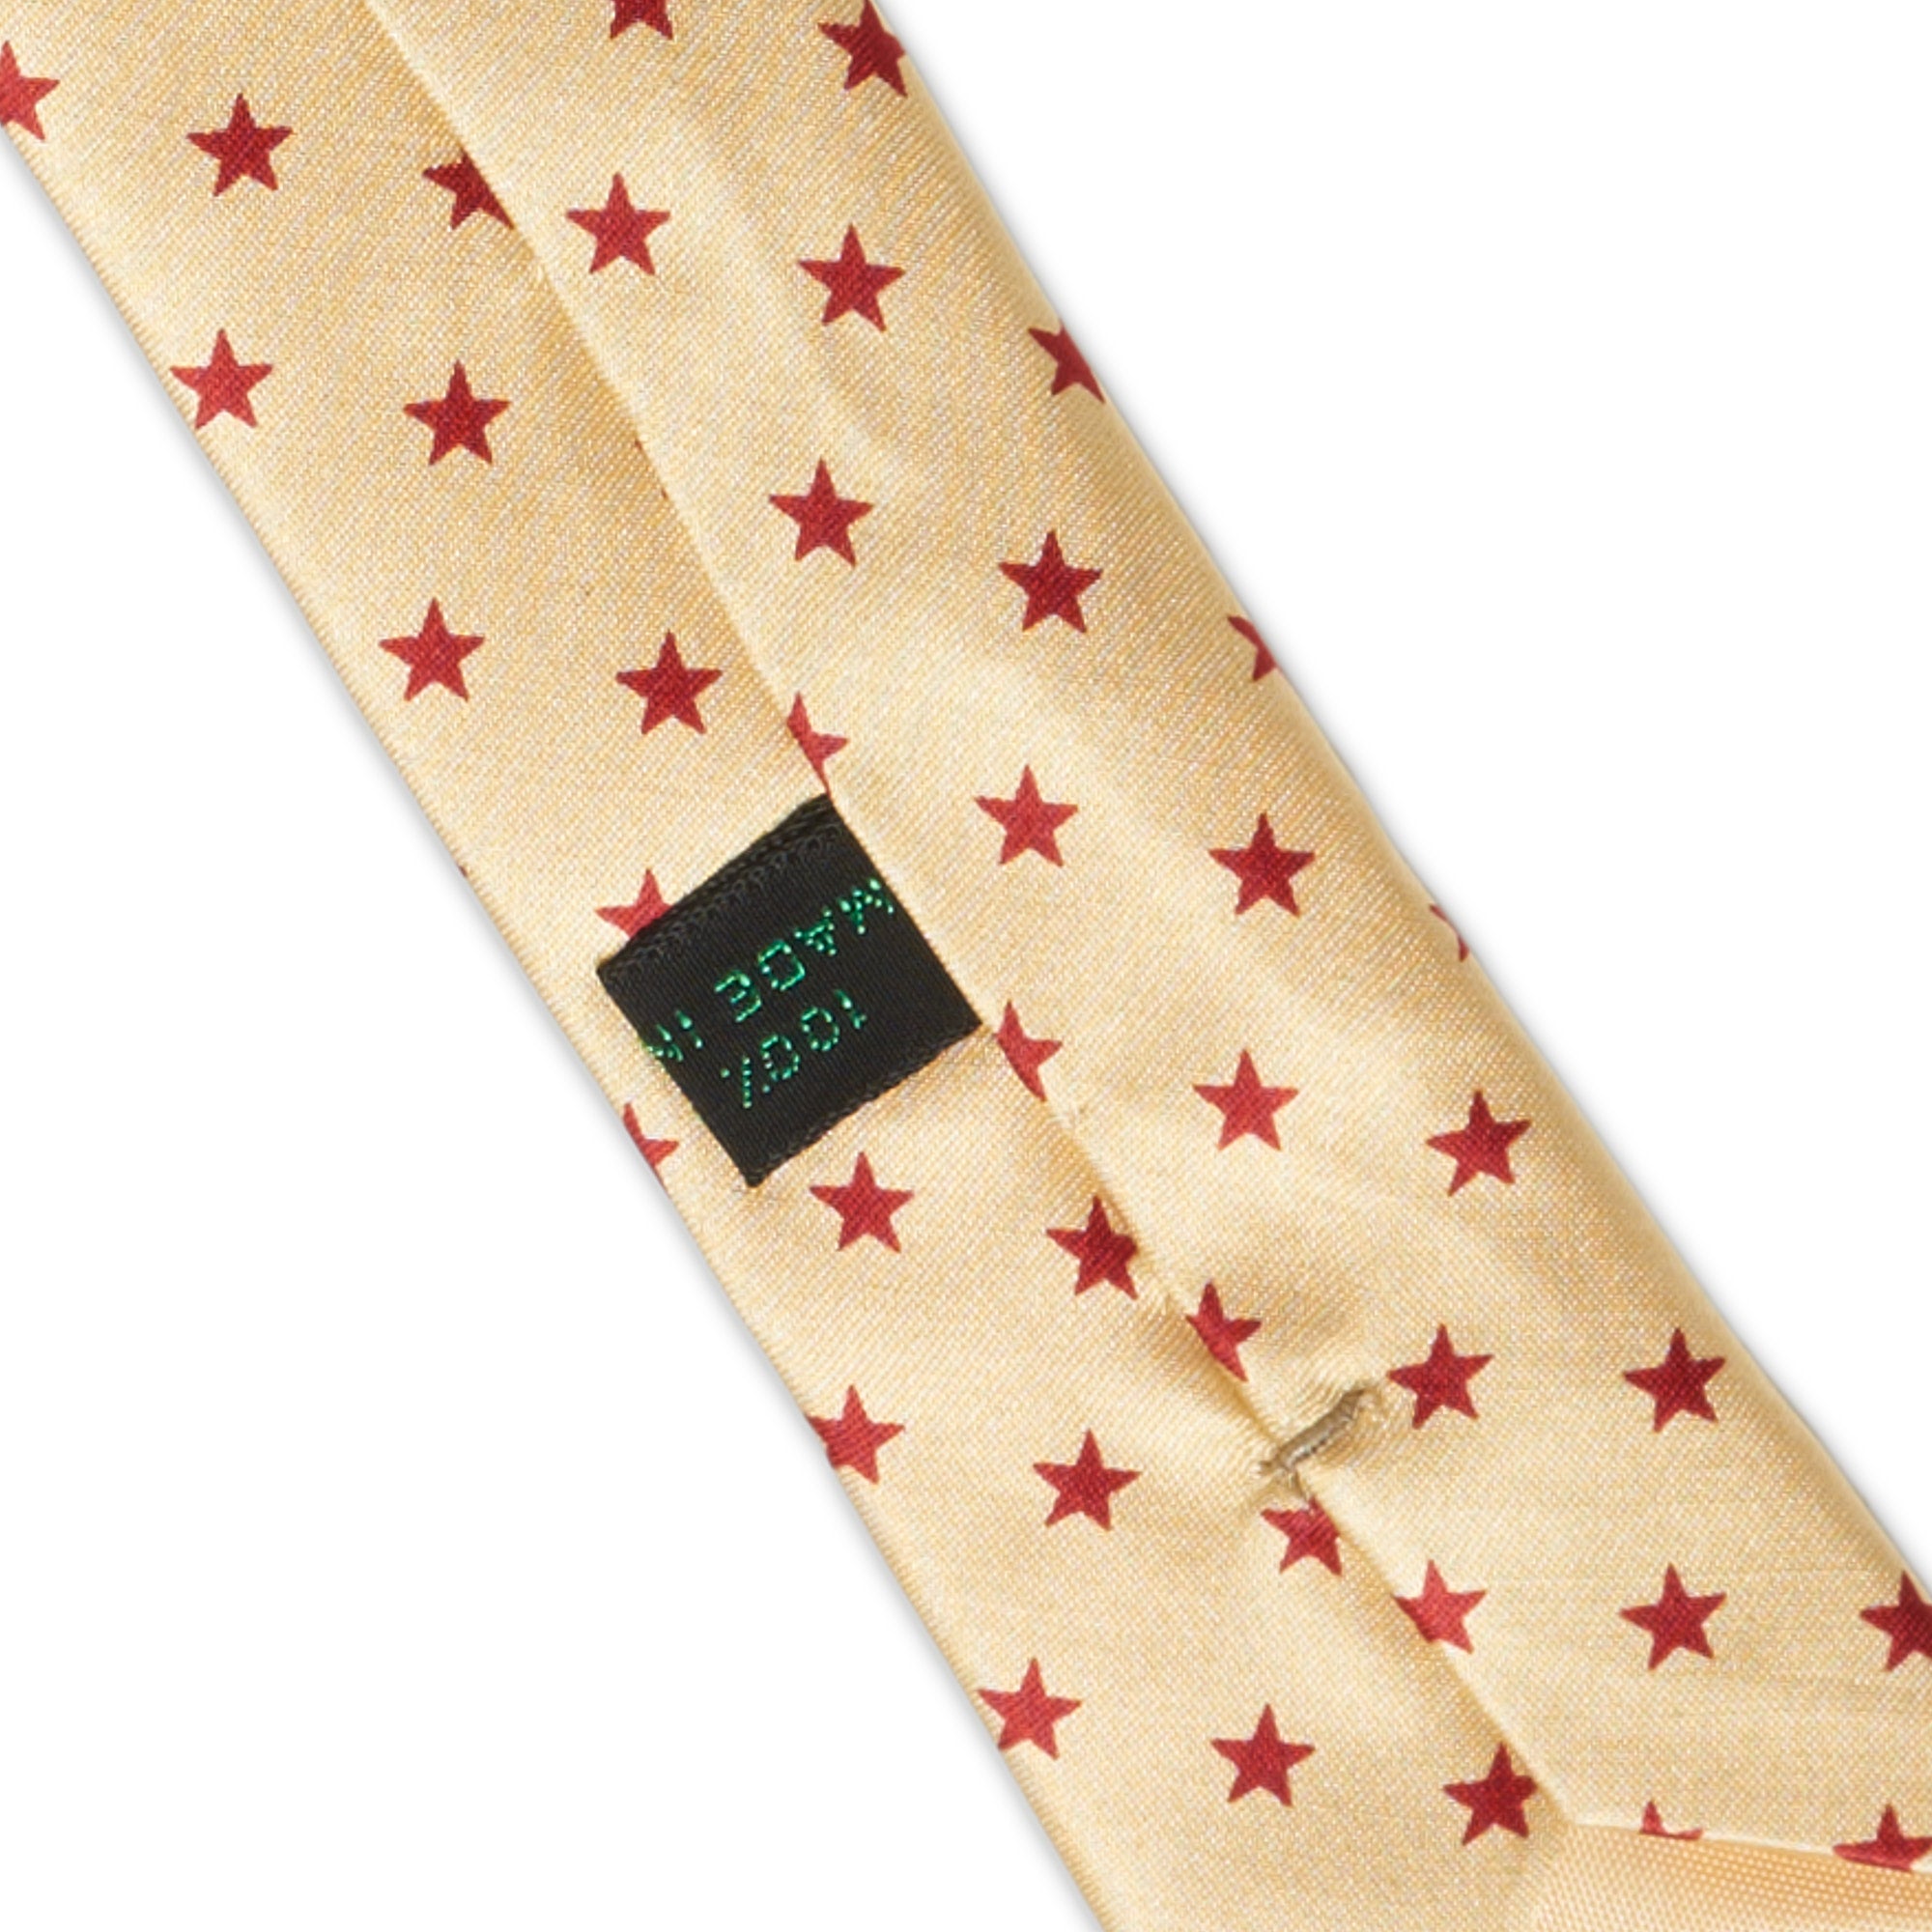 BOTTEGA VENETA Handmade Gold-Red Star Design Silk Tie